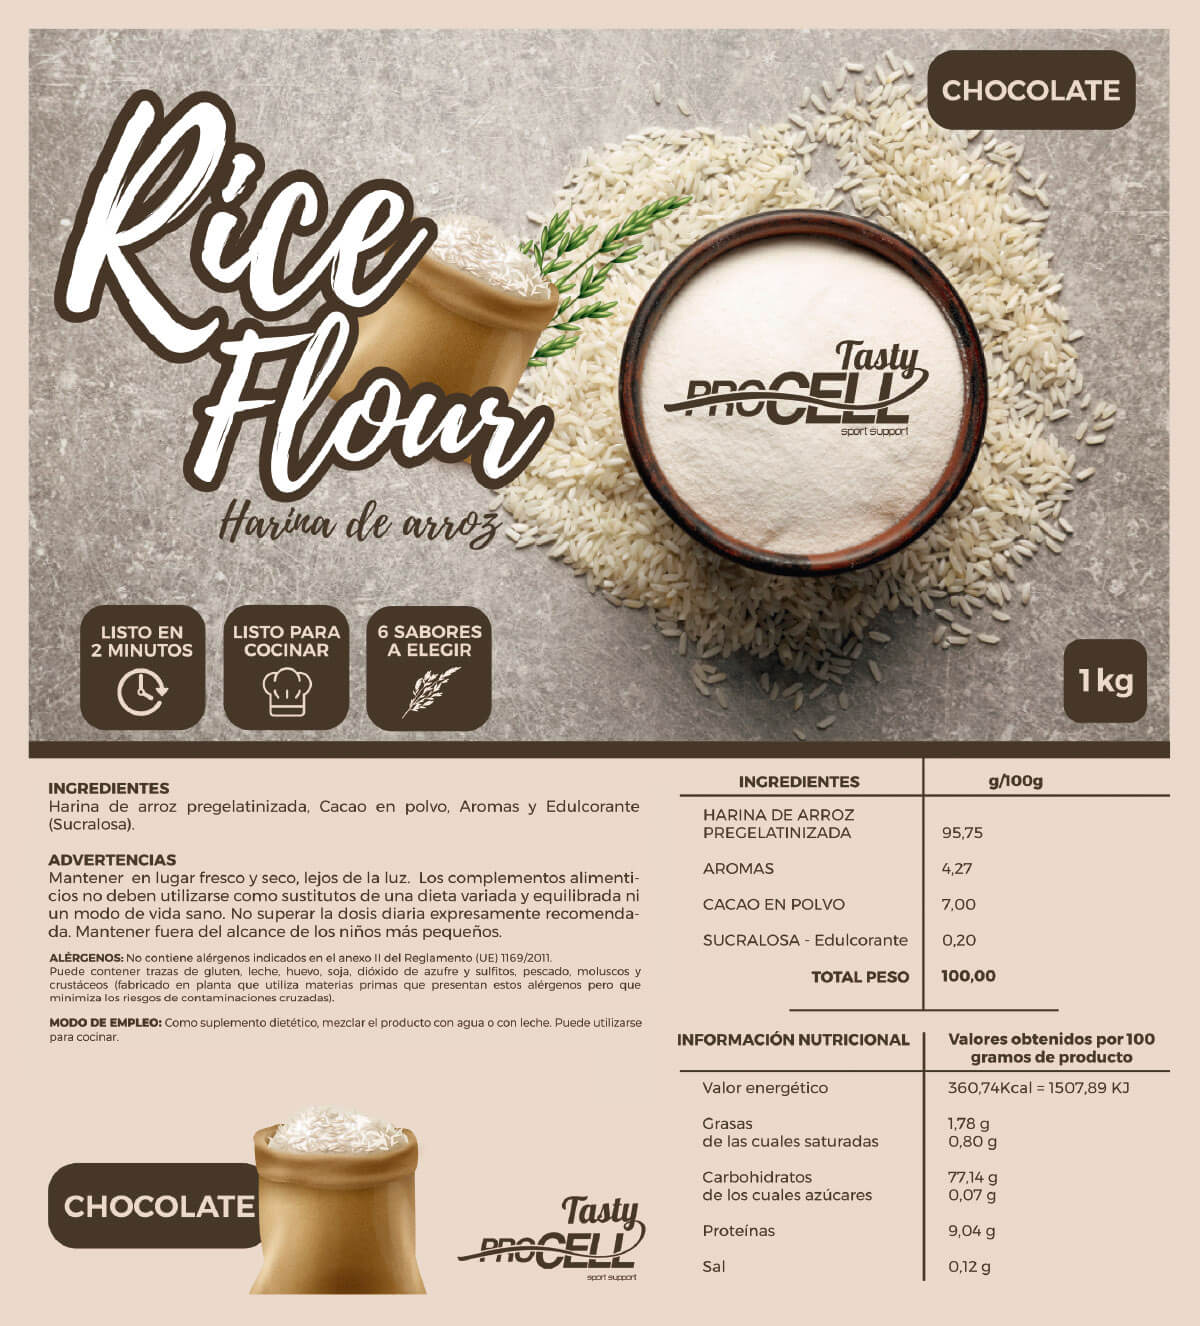 Crema de arroz - Harina de arroz procedida